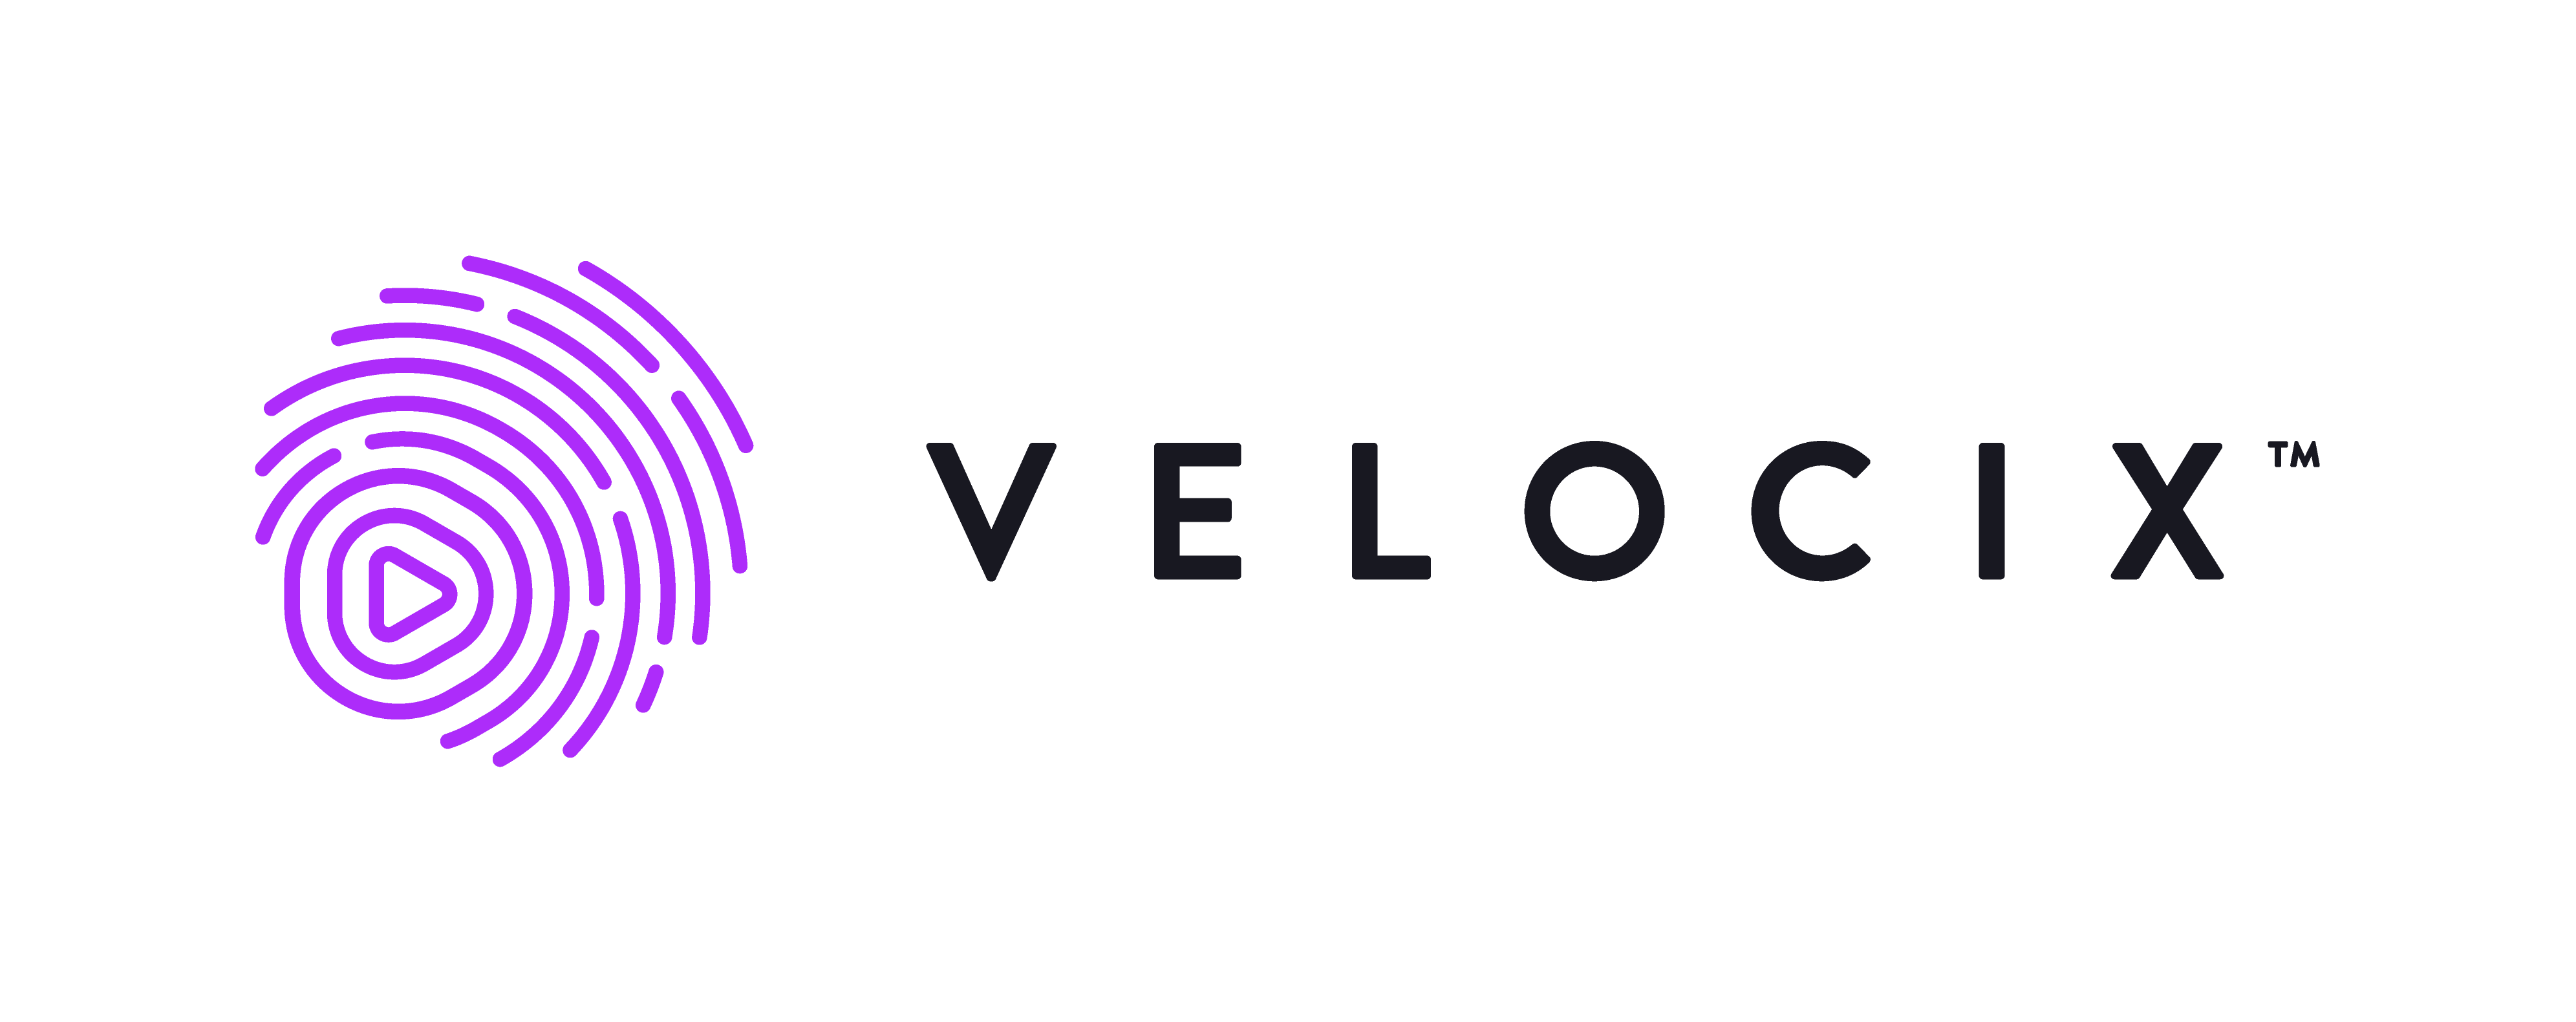 velocix-logo-full-color-dark-high-res.png